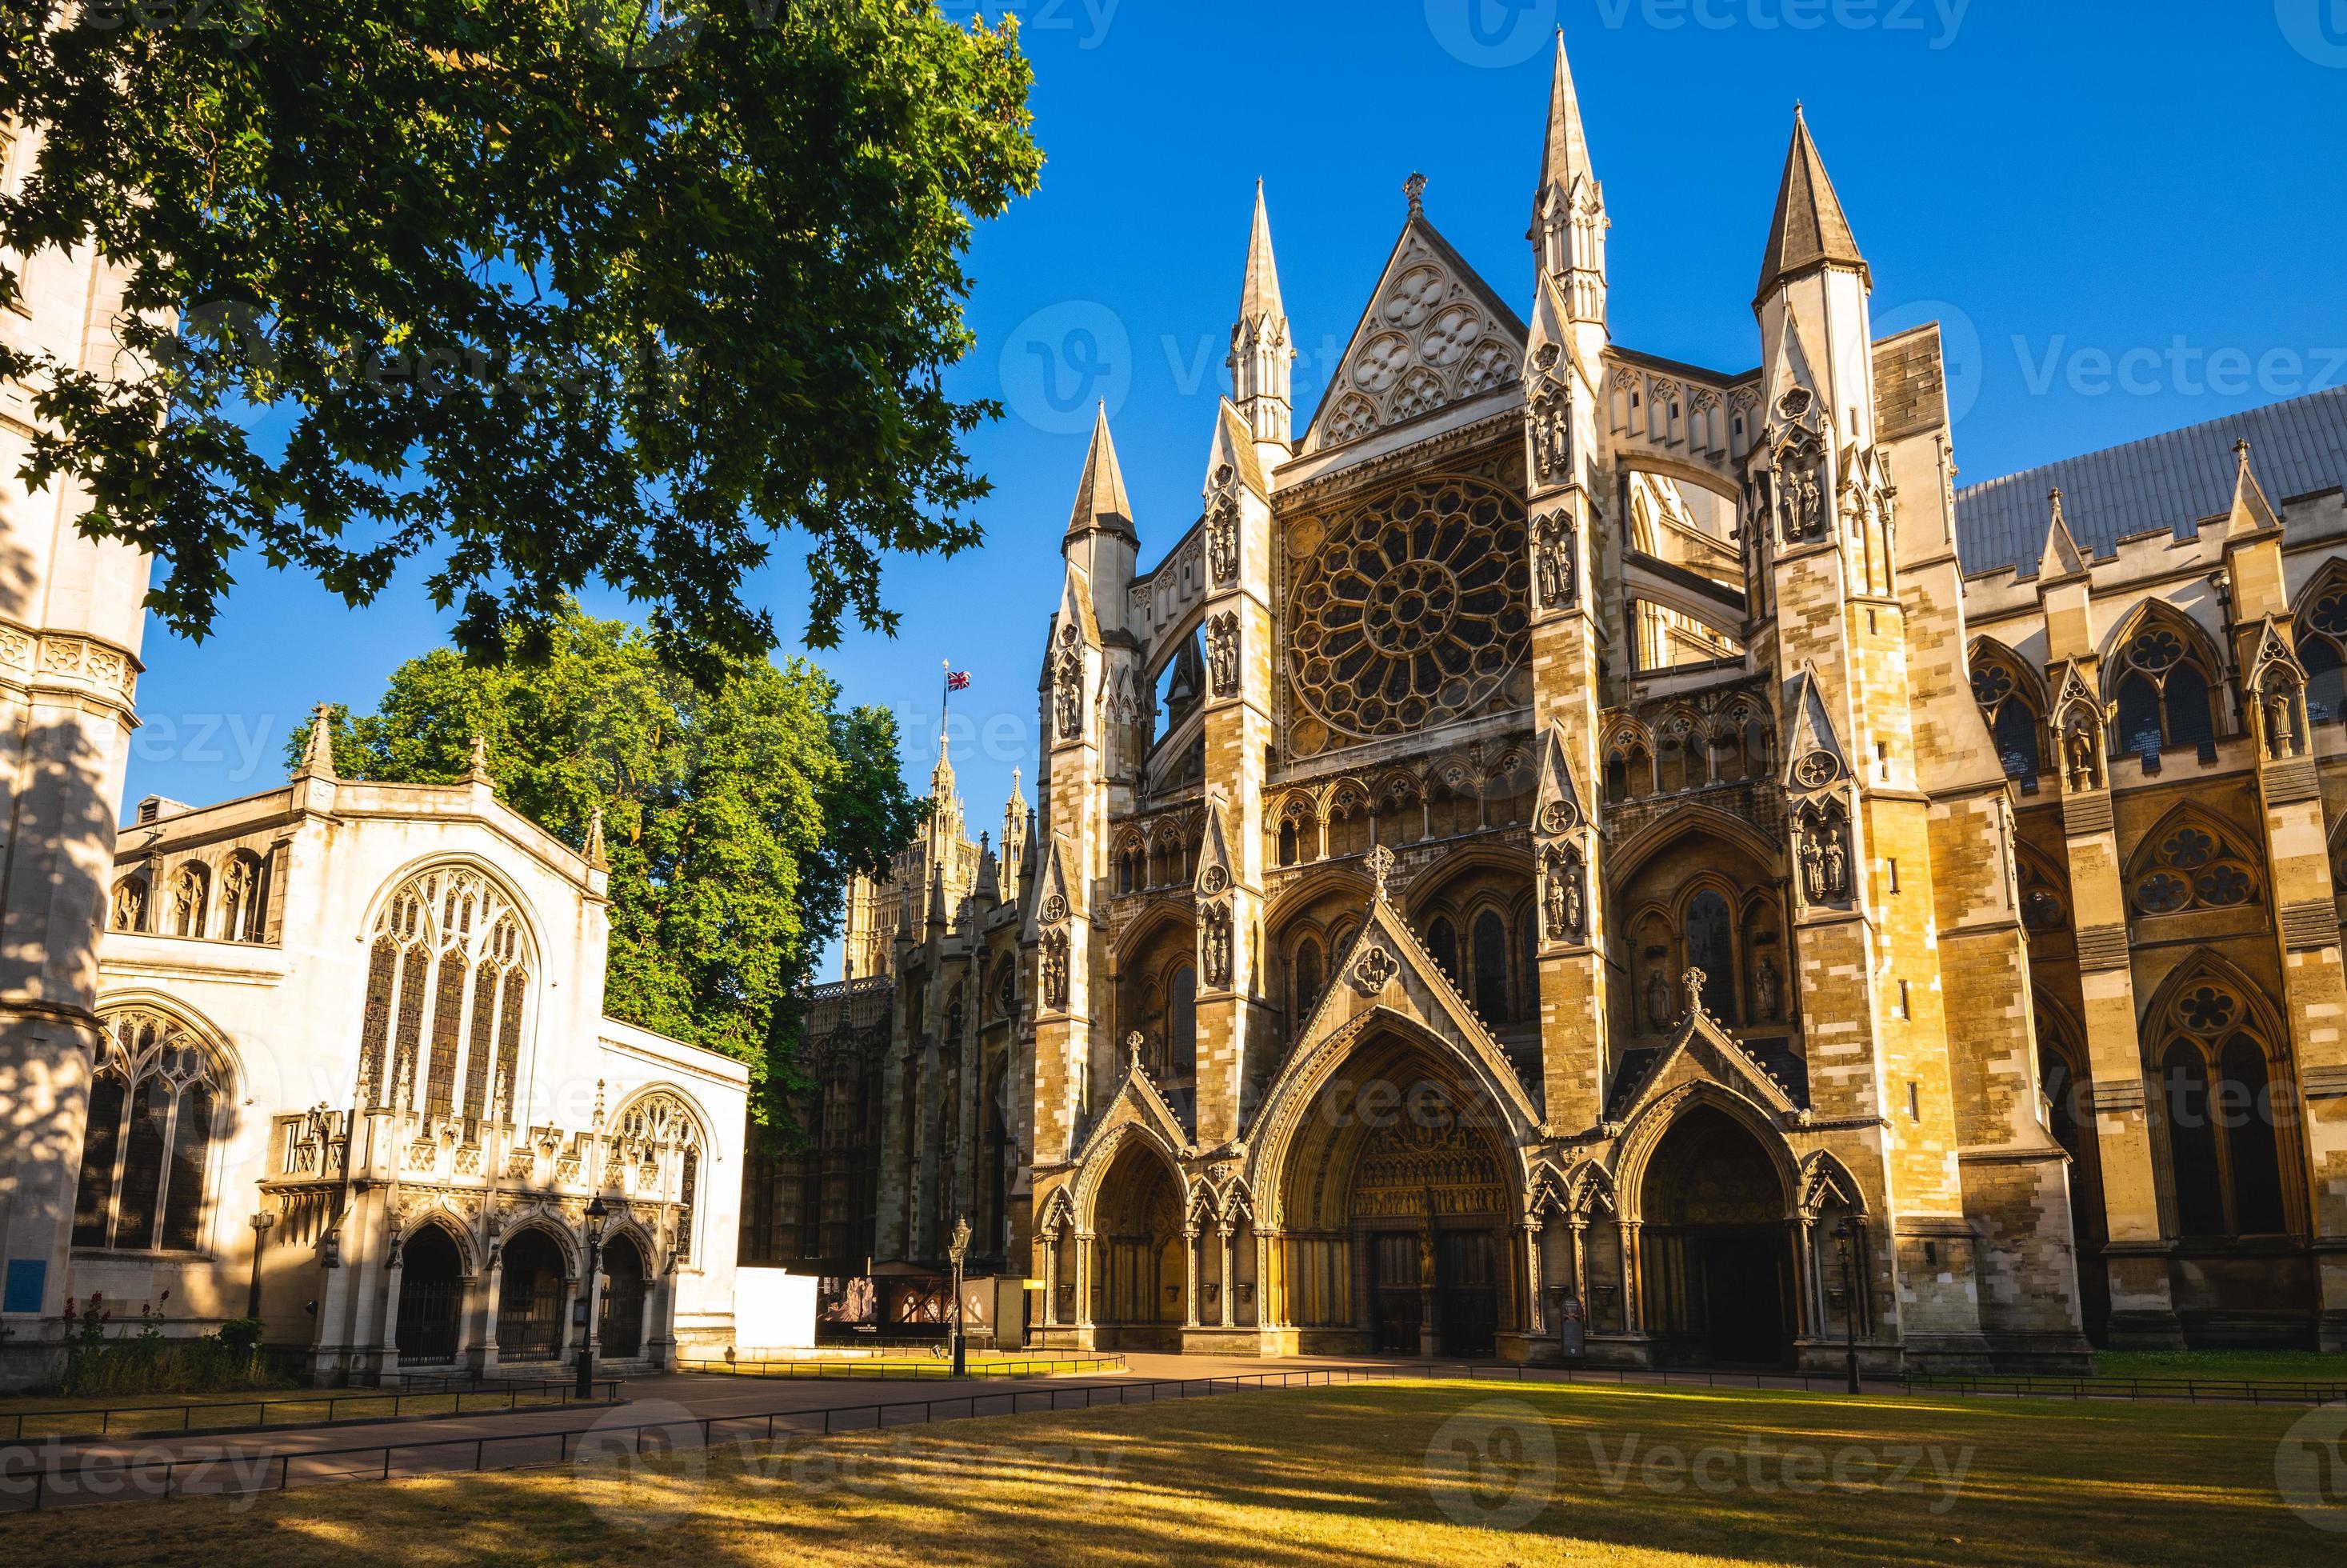 fasad av Westminster Abbey i London, England, Storbritannien foto